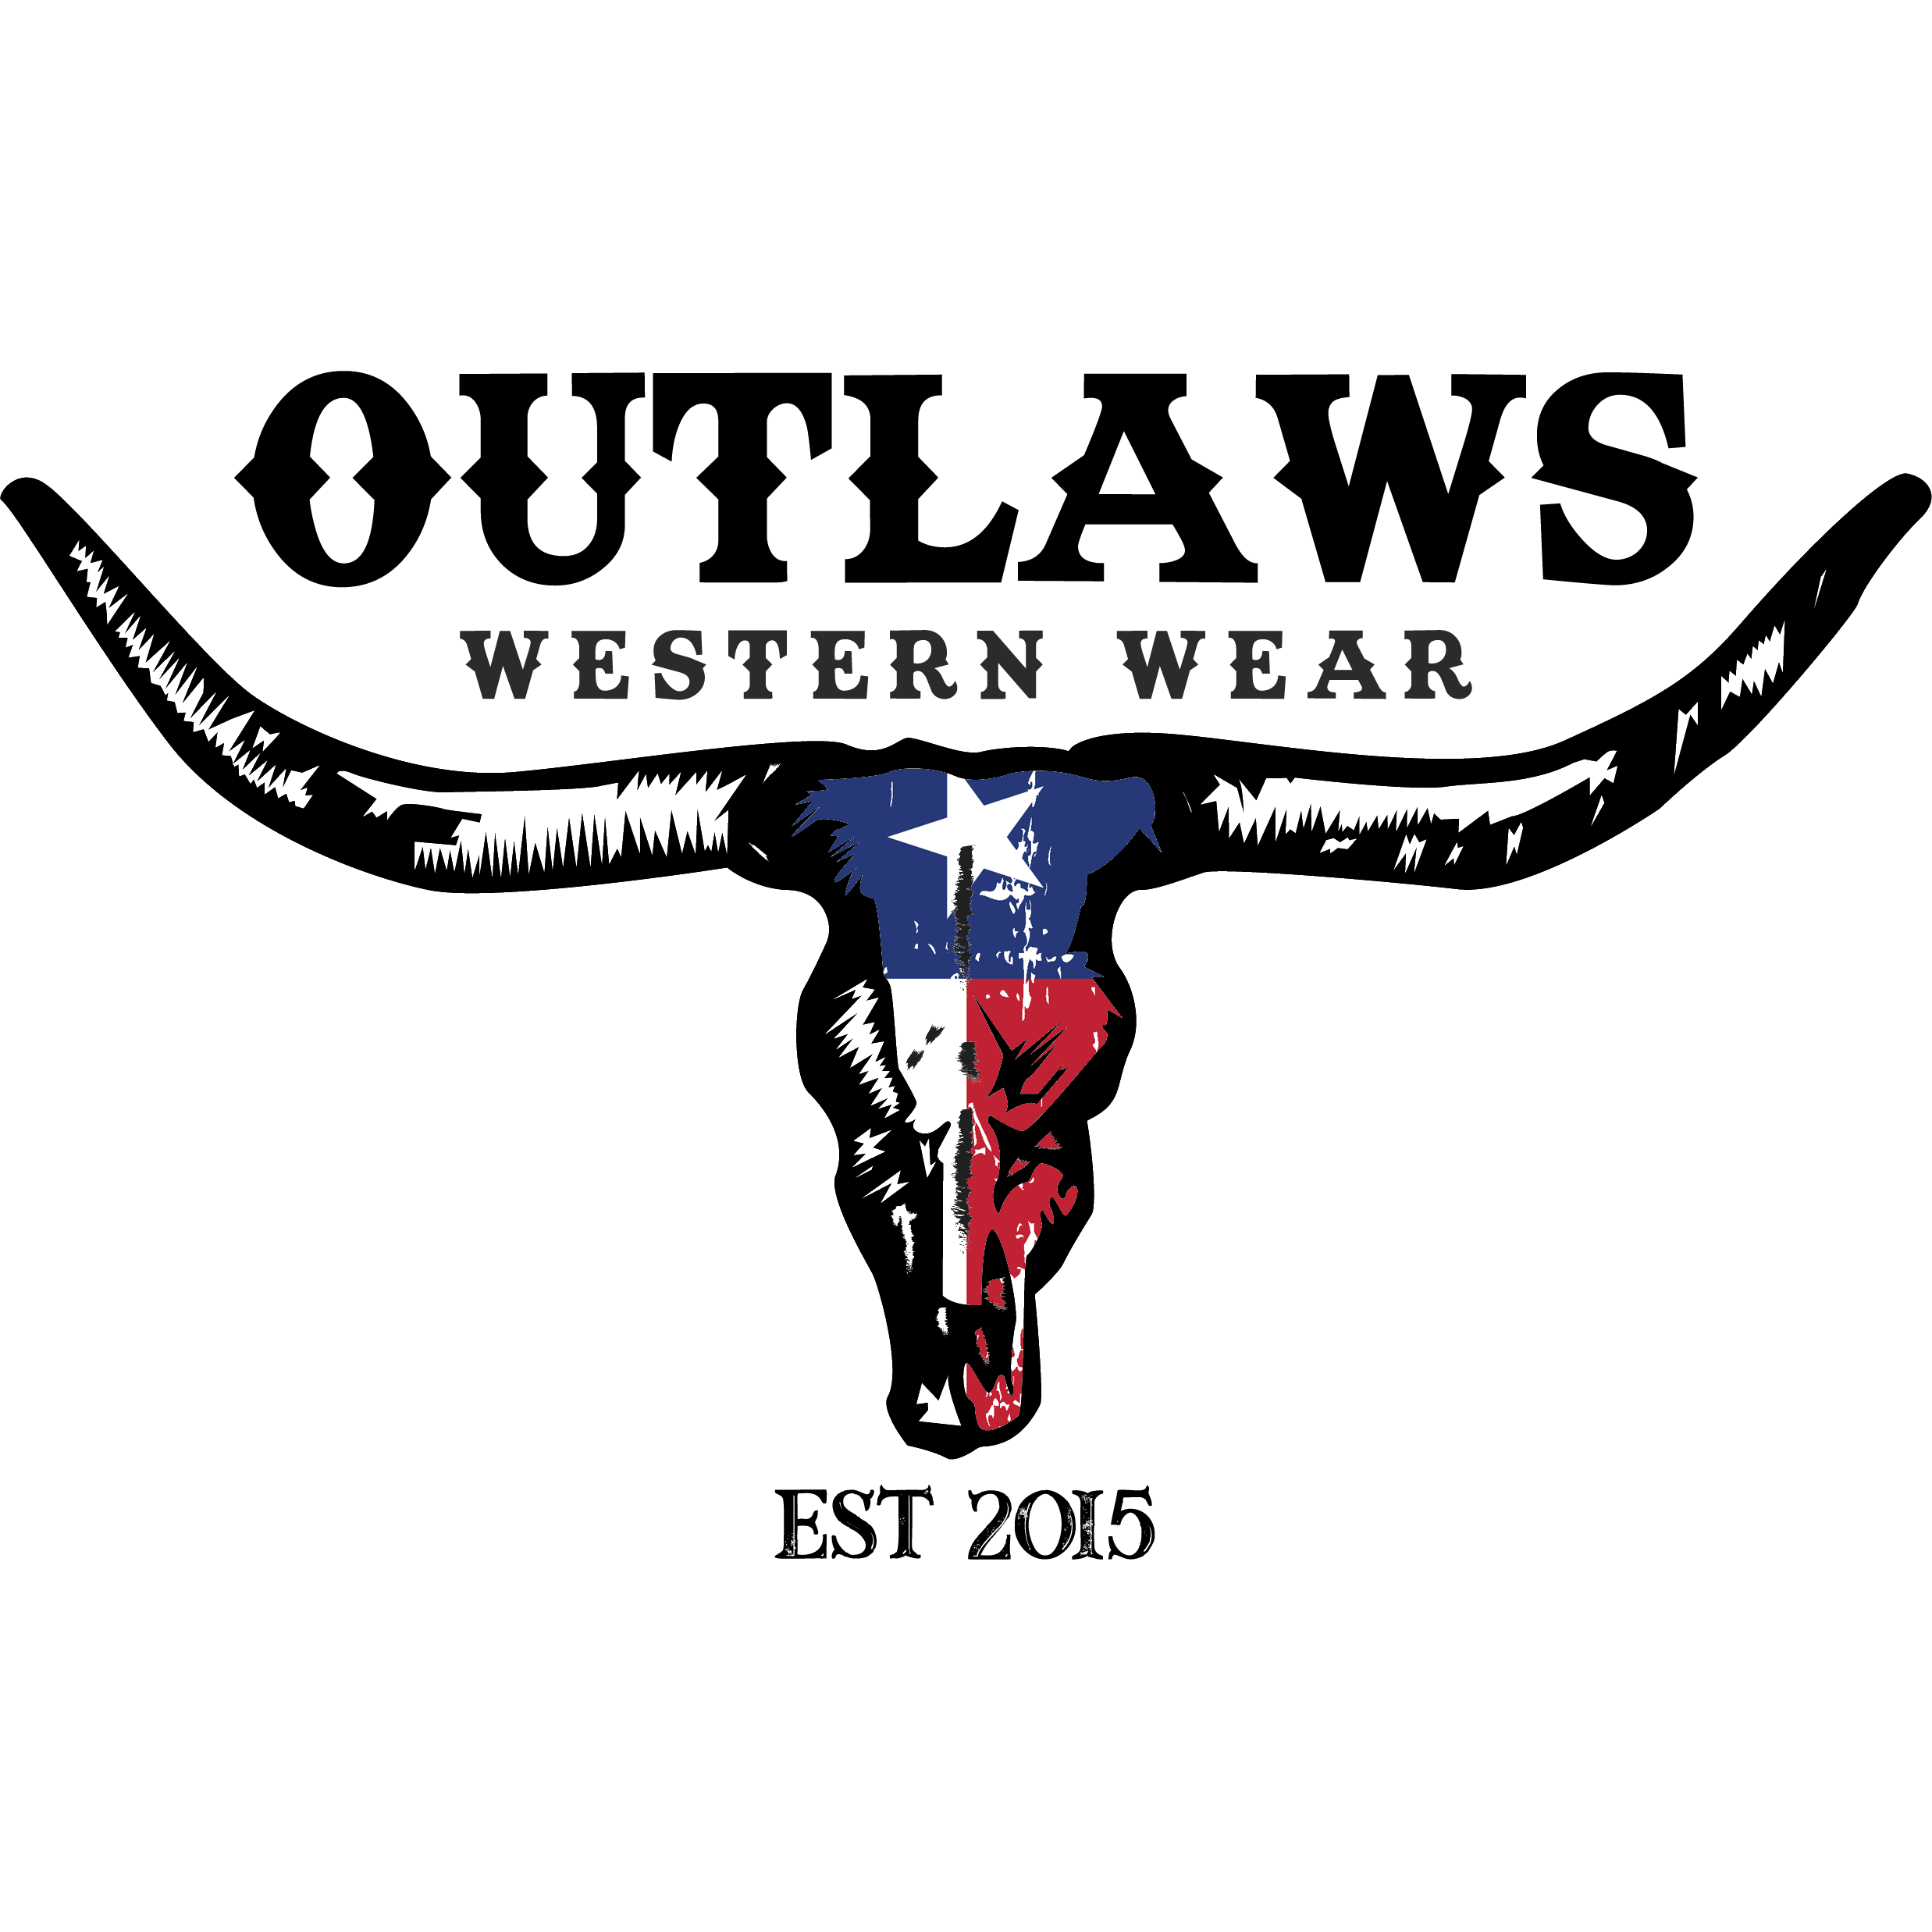 Outlaws Western Wear - San Antonio, TX 78216 - (210)507-2853 | ShowMeLocal.com